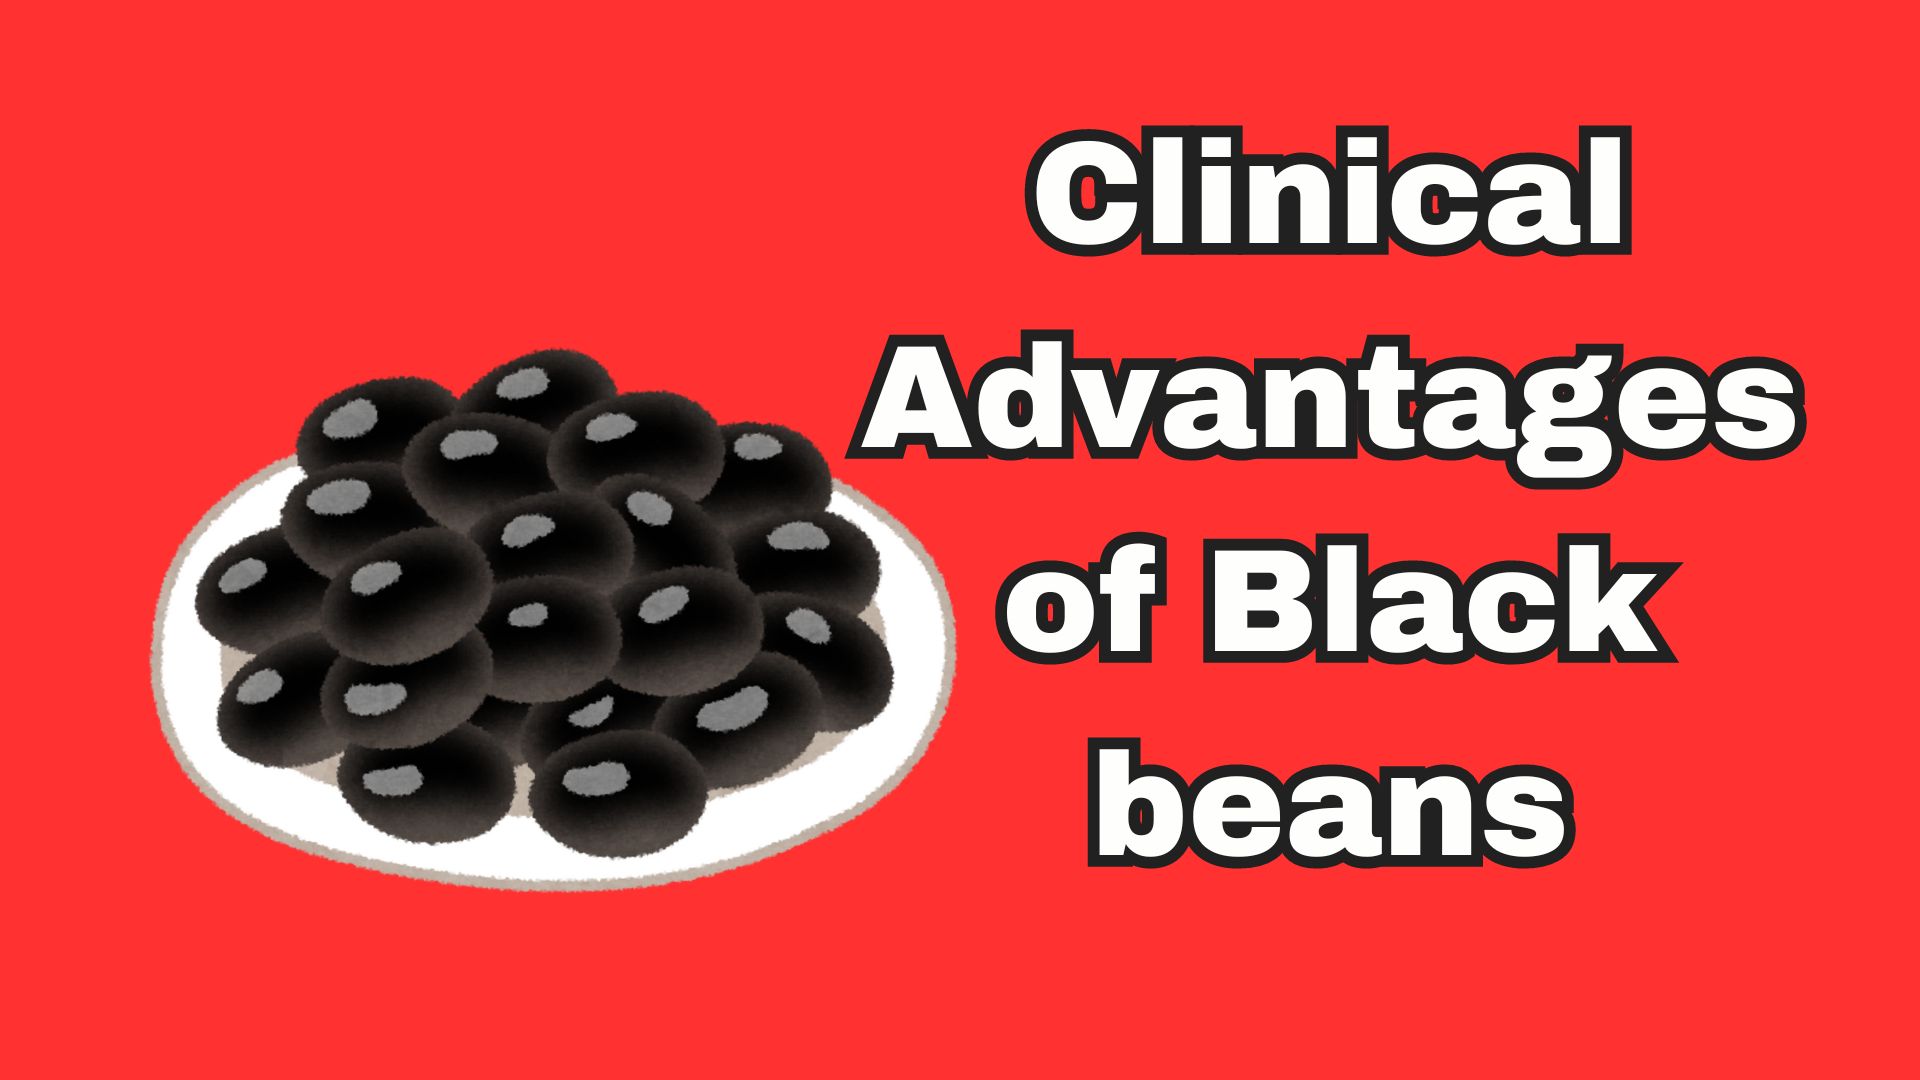 Clinical Advantages of Black beans